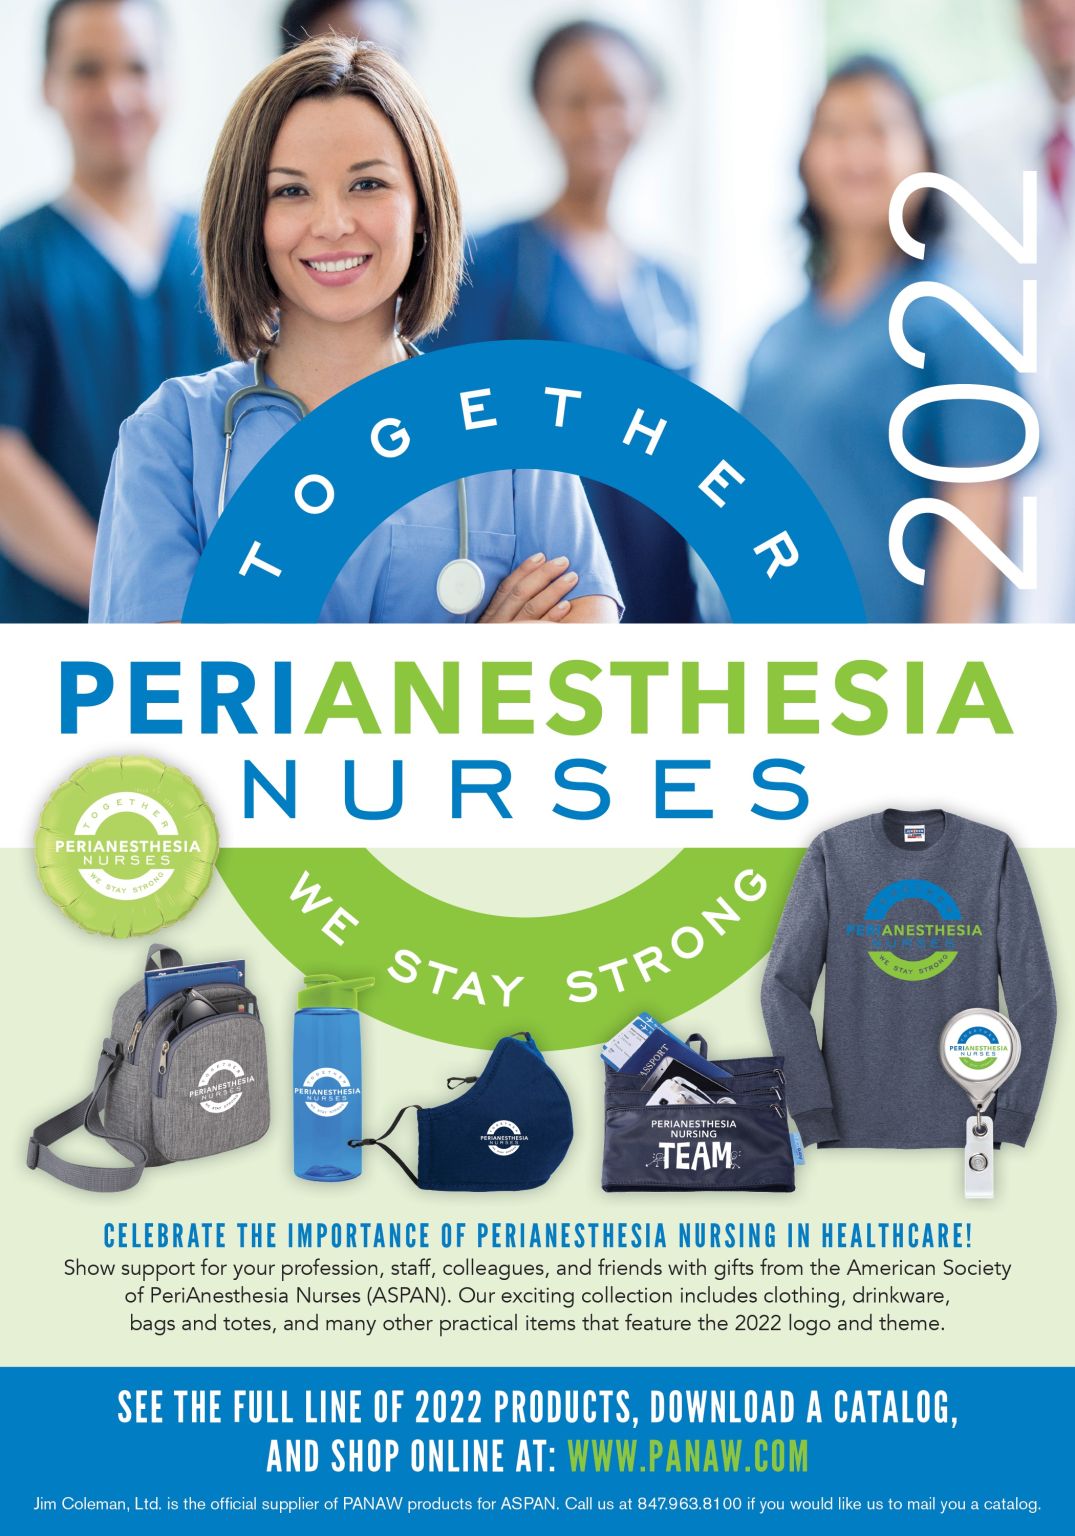 American Society of PeriAnesthesia Nurses ASPAN on LinkedIn